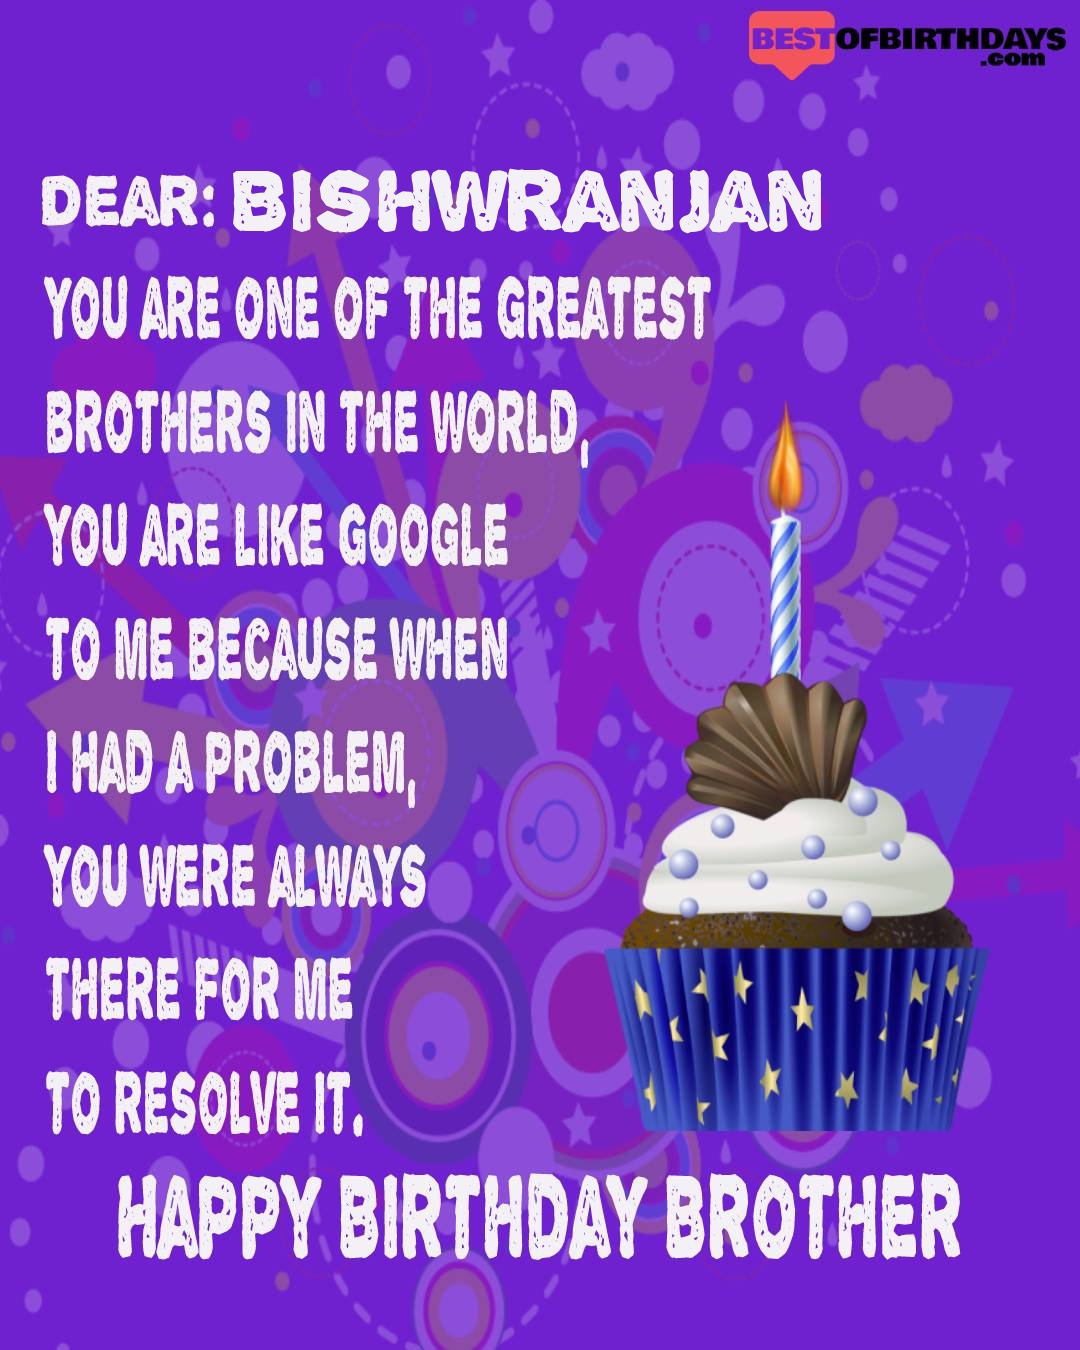 Happy birthday bishwranjan bhai brother bro